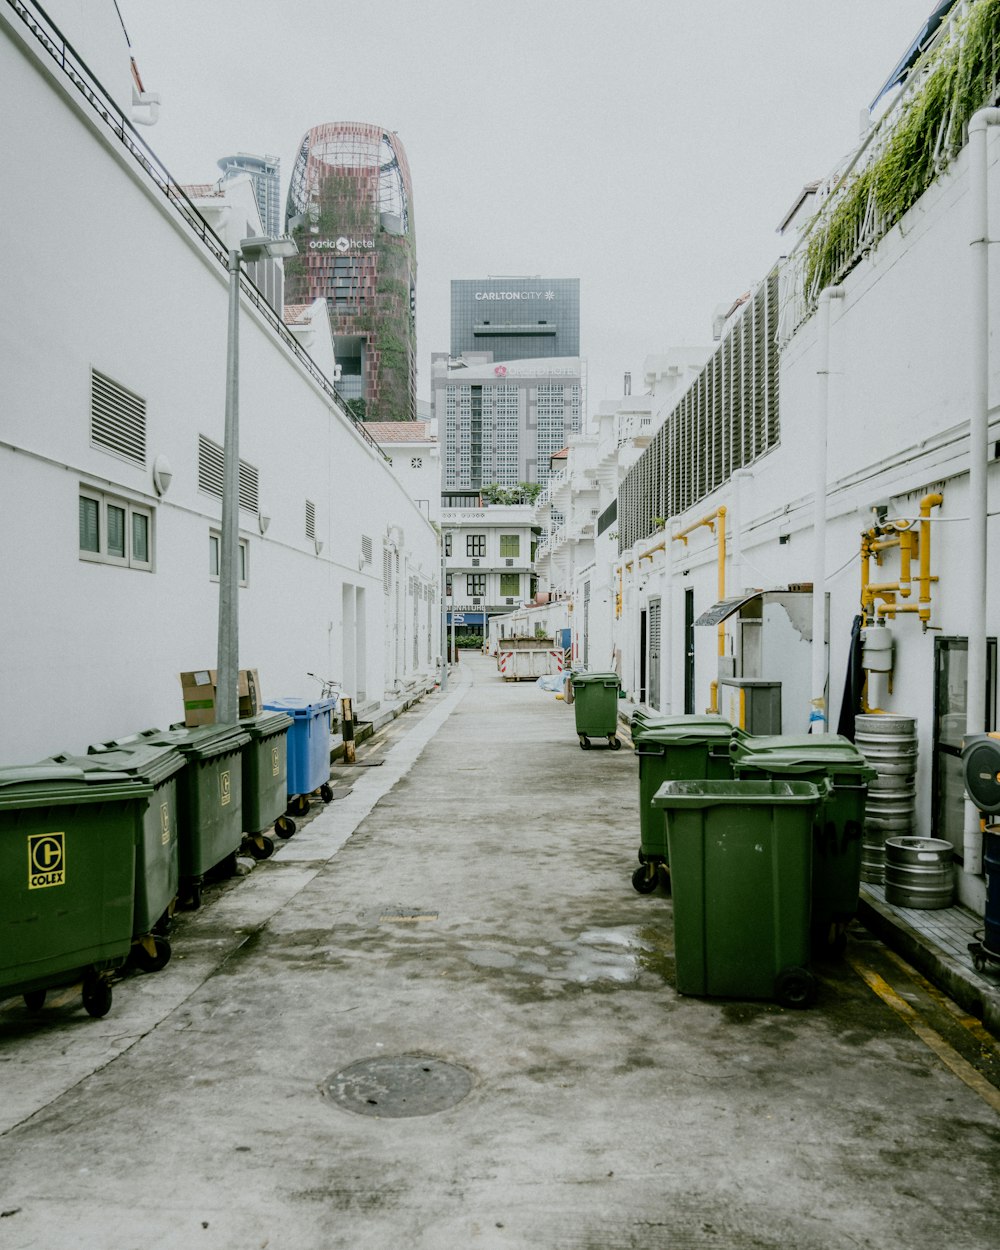 green trash bin on sidewalk during daytime